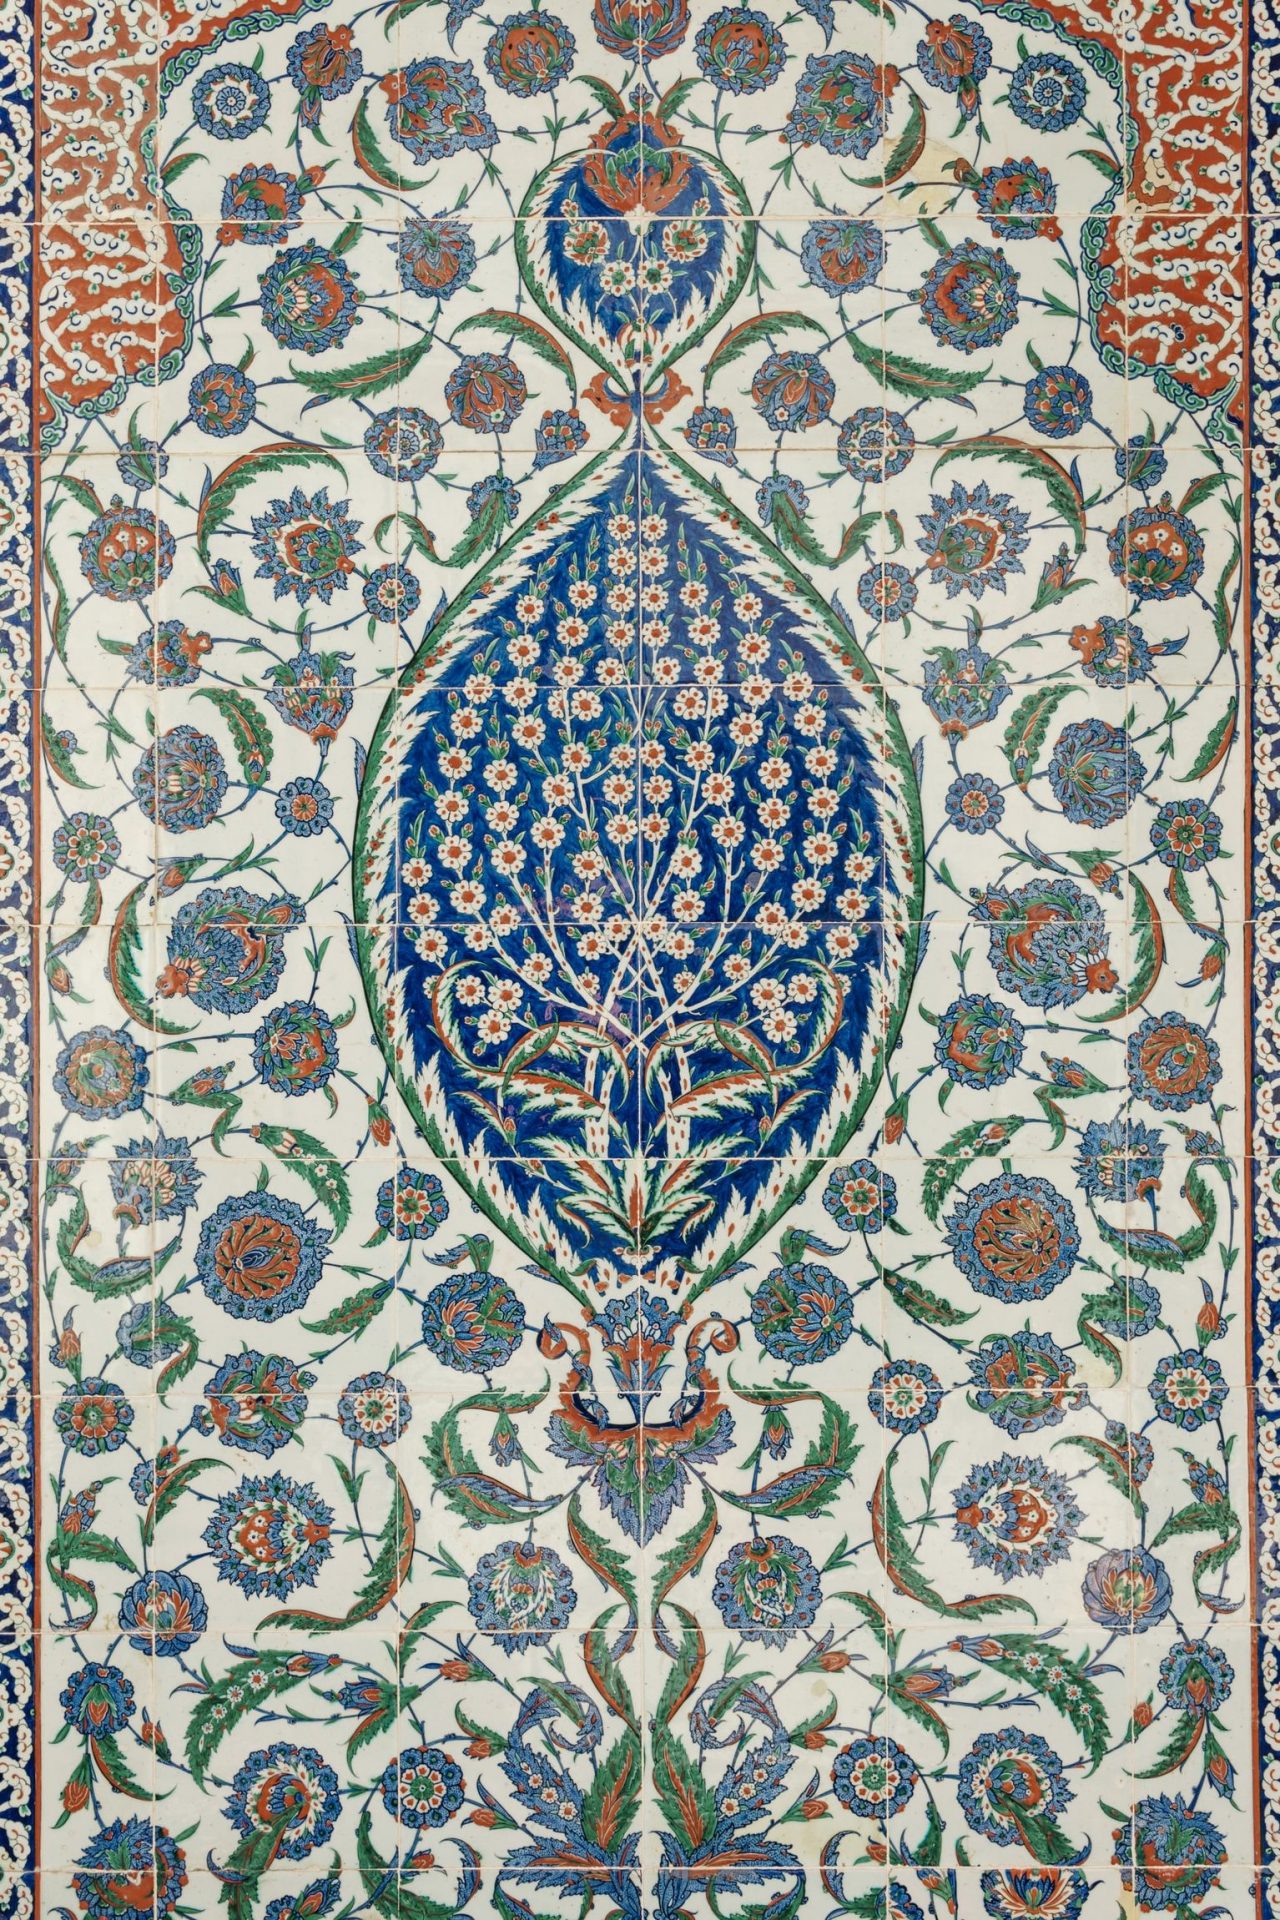 Islamic Wallpaper - Wallpaper Sun